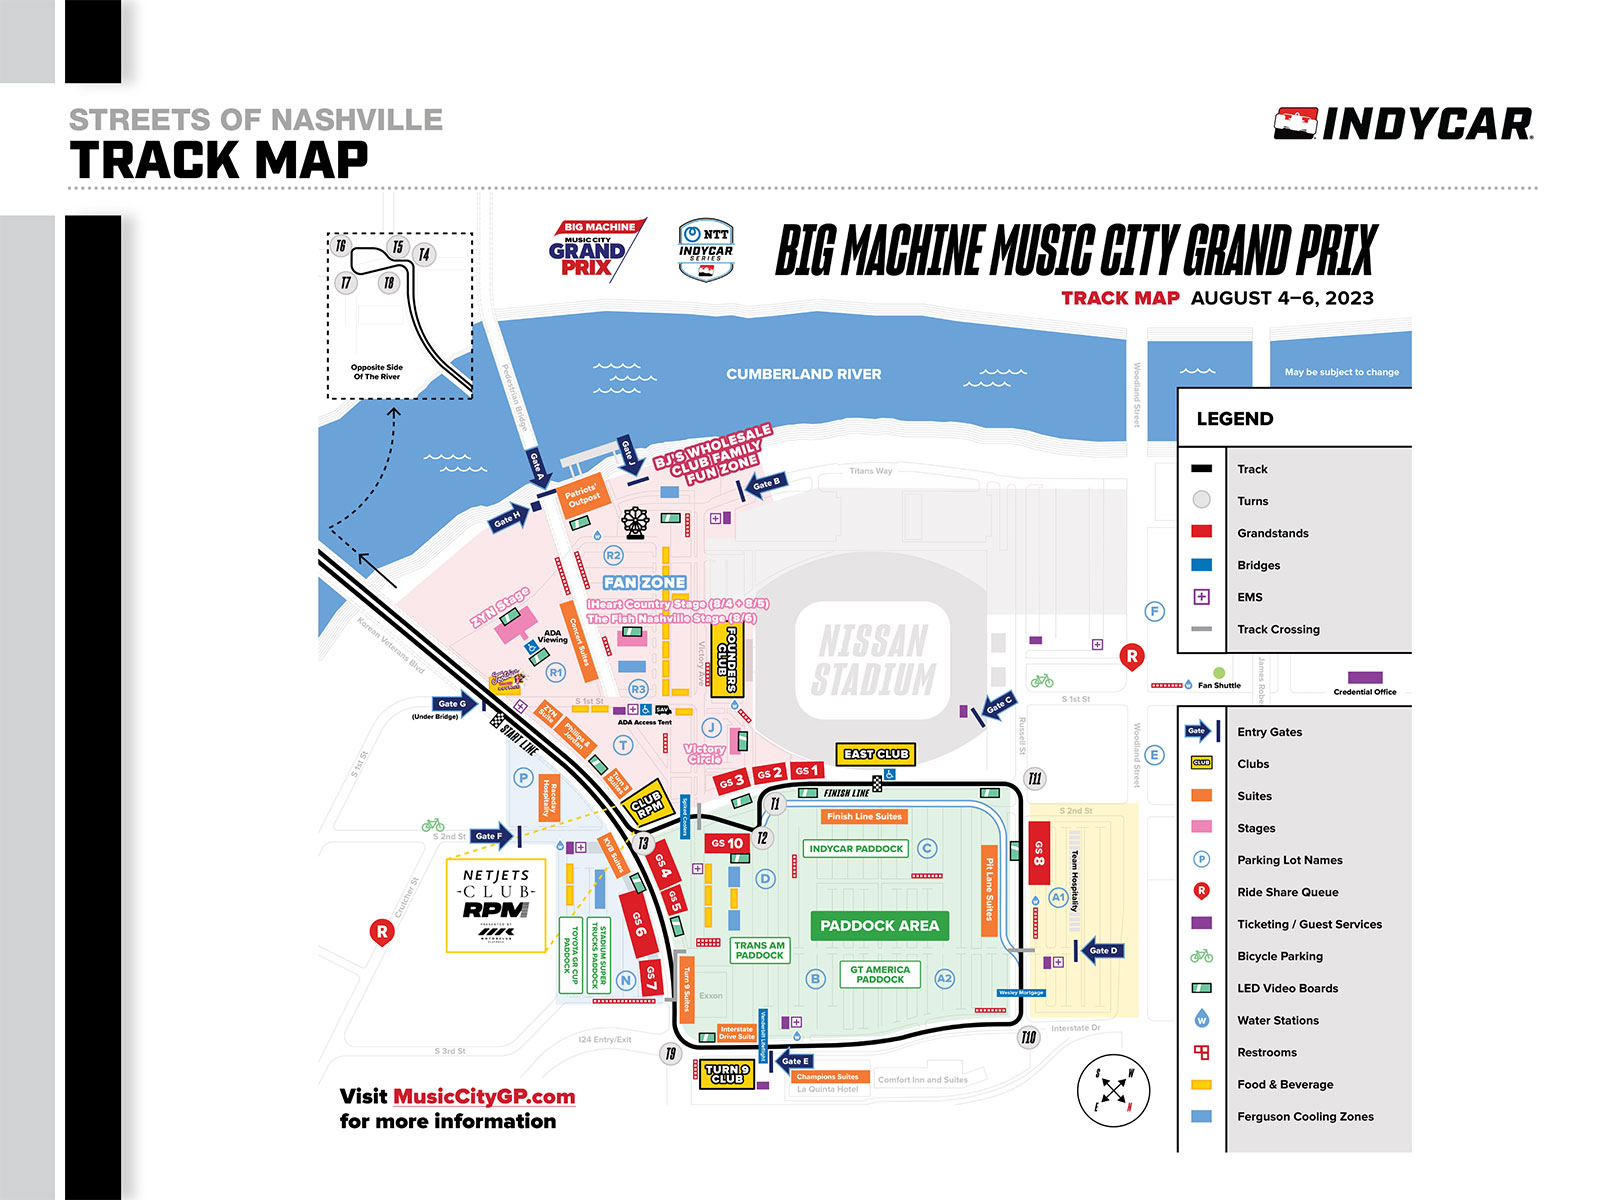 Music City Grand Prix track map WTAF? r/nashville